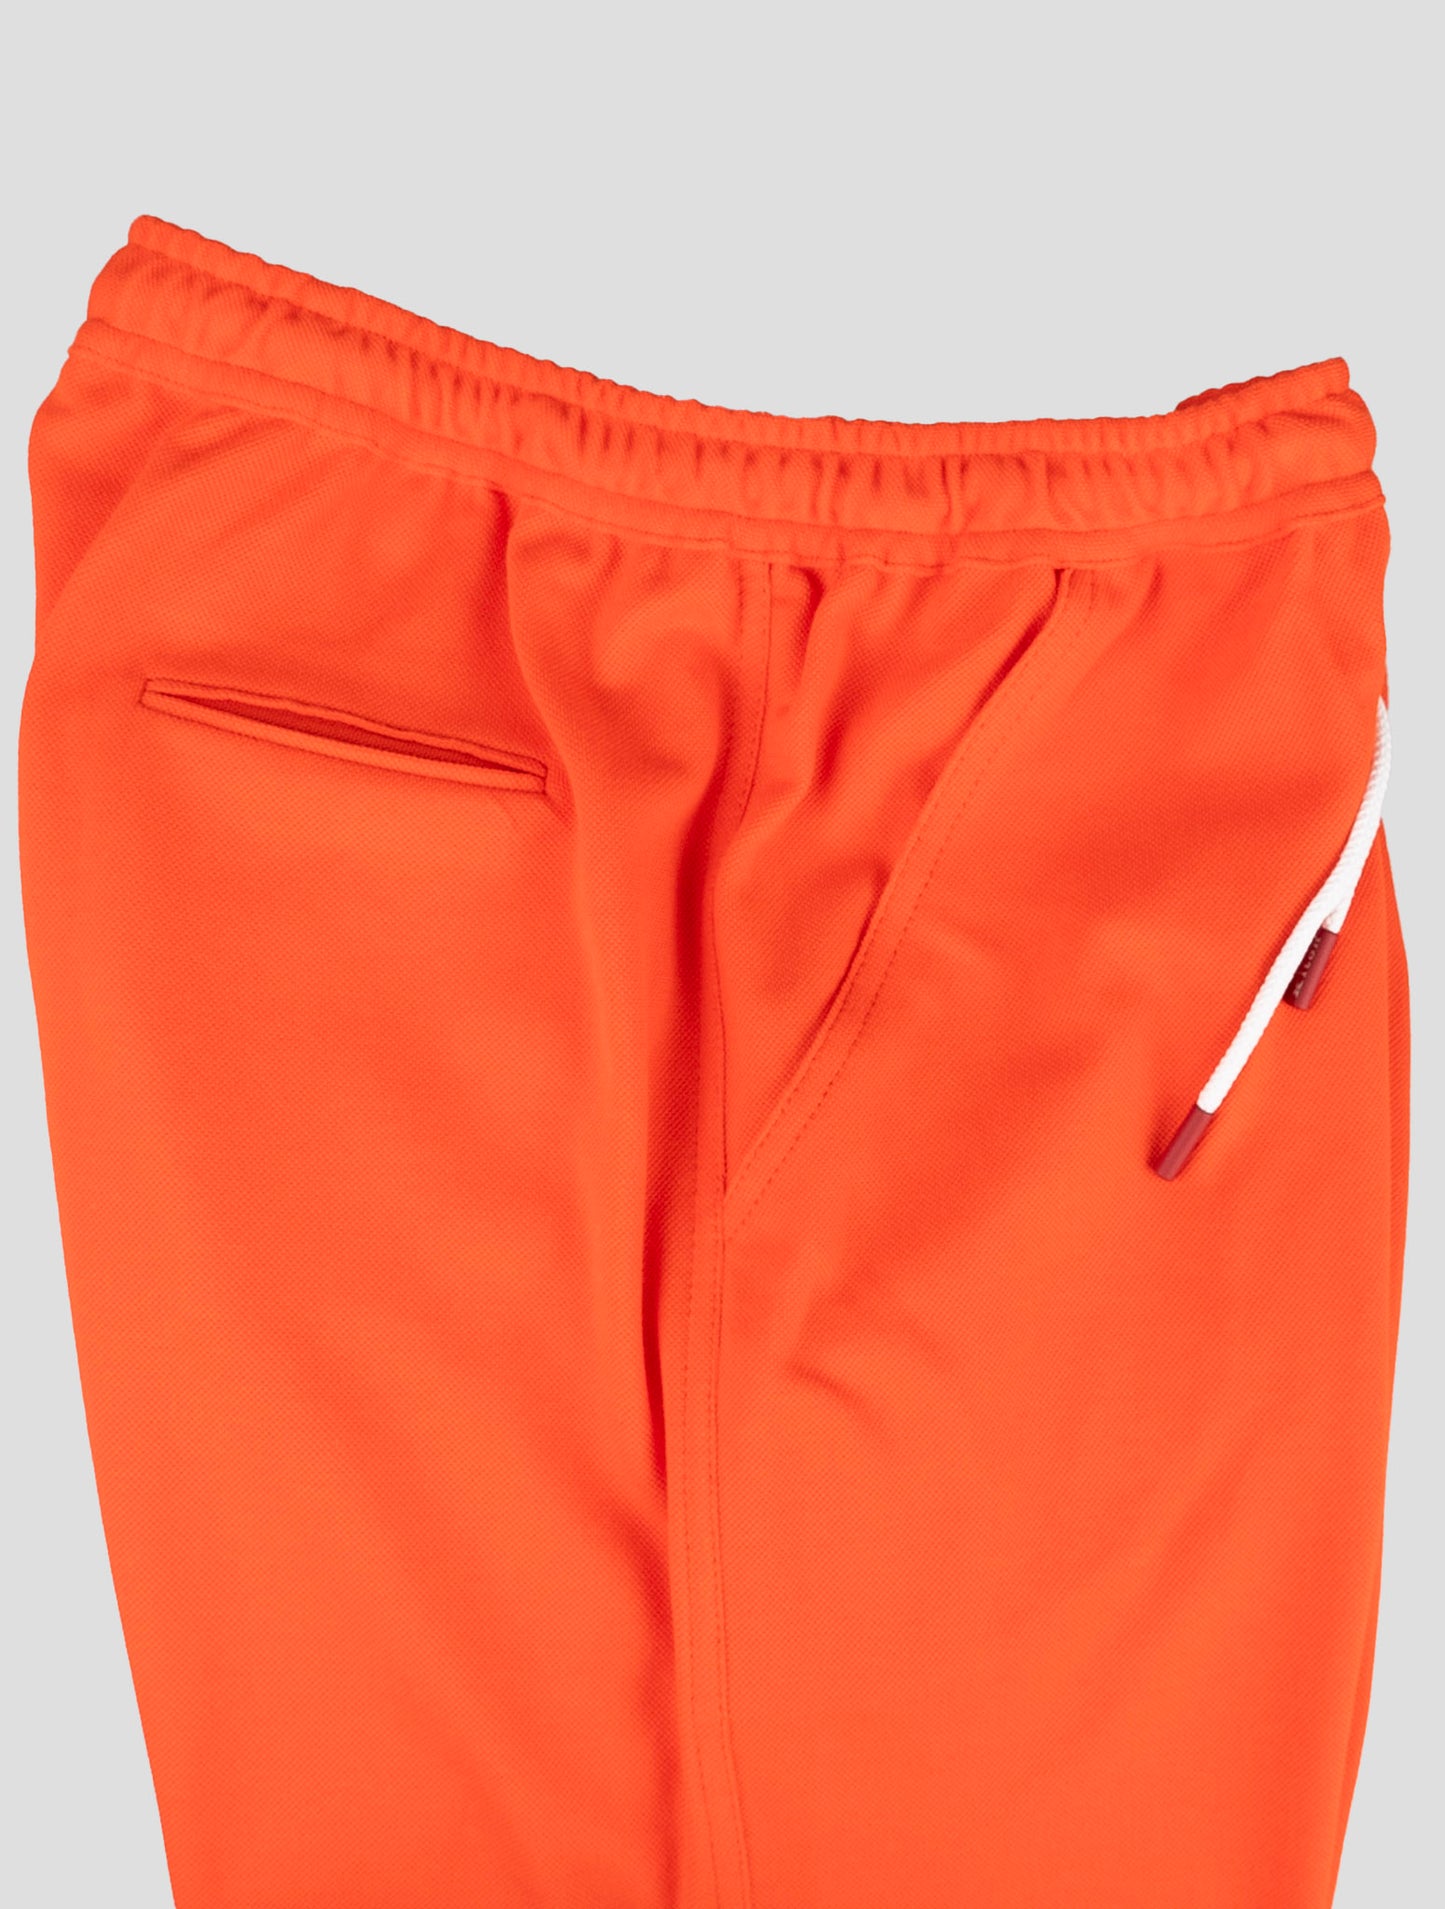 Traje a juego Kiton-Azul Mariano y naranja pantalones cortos chándal